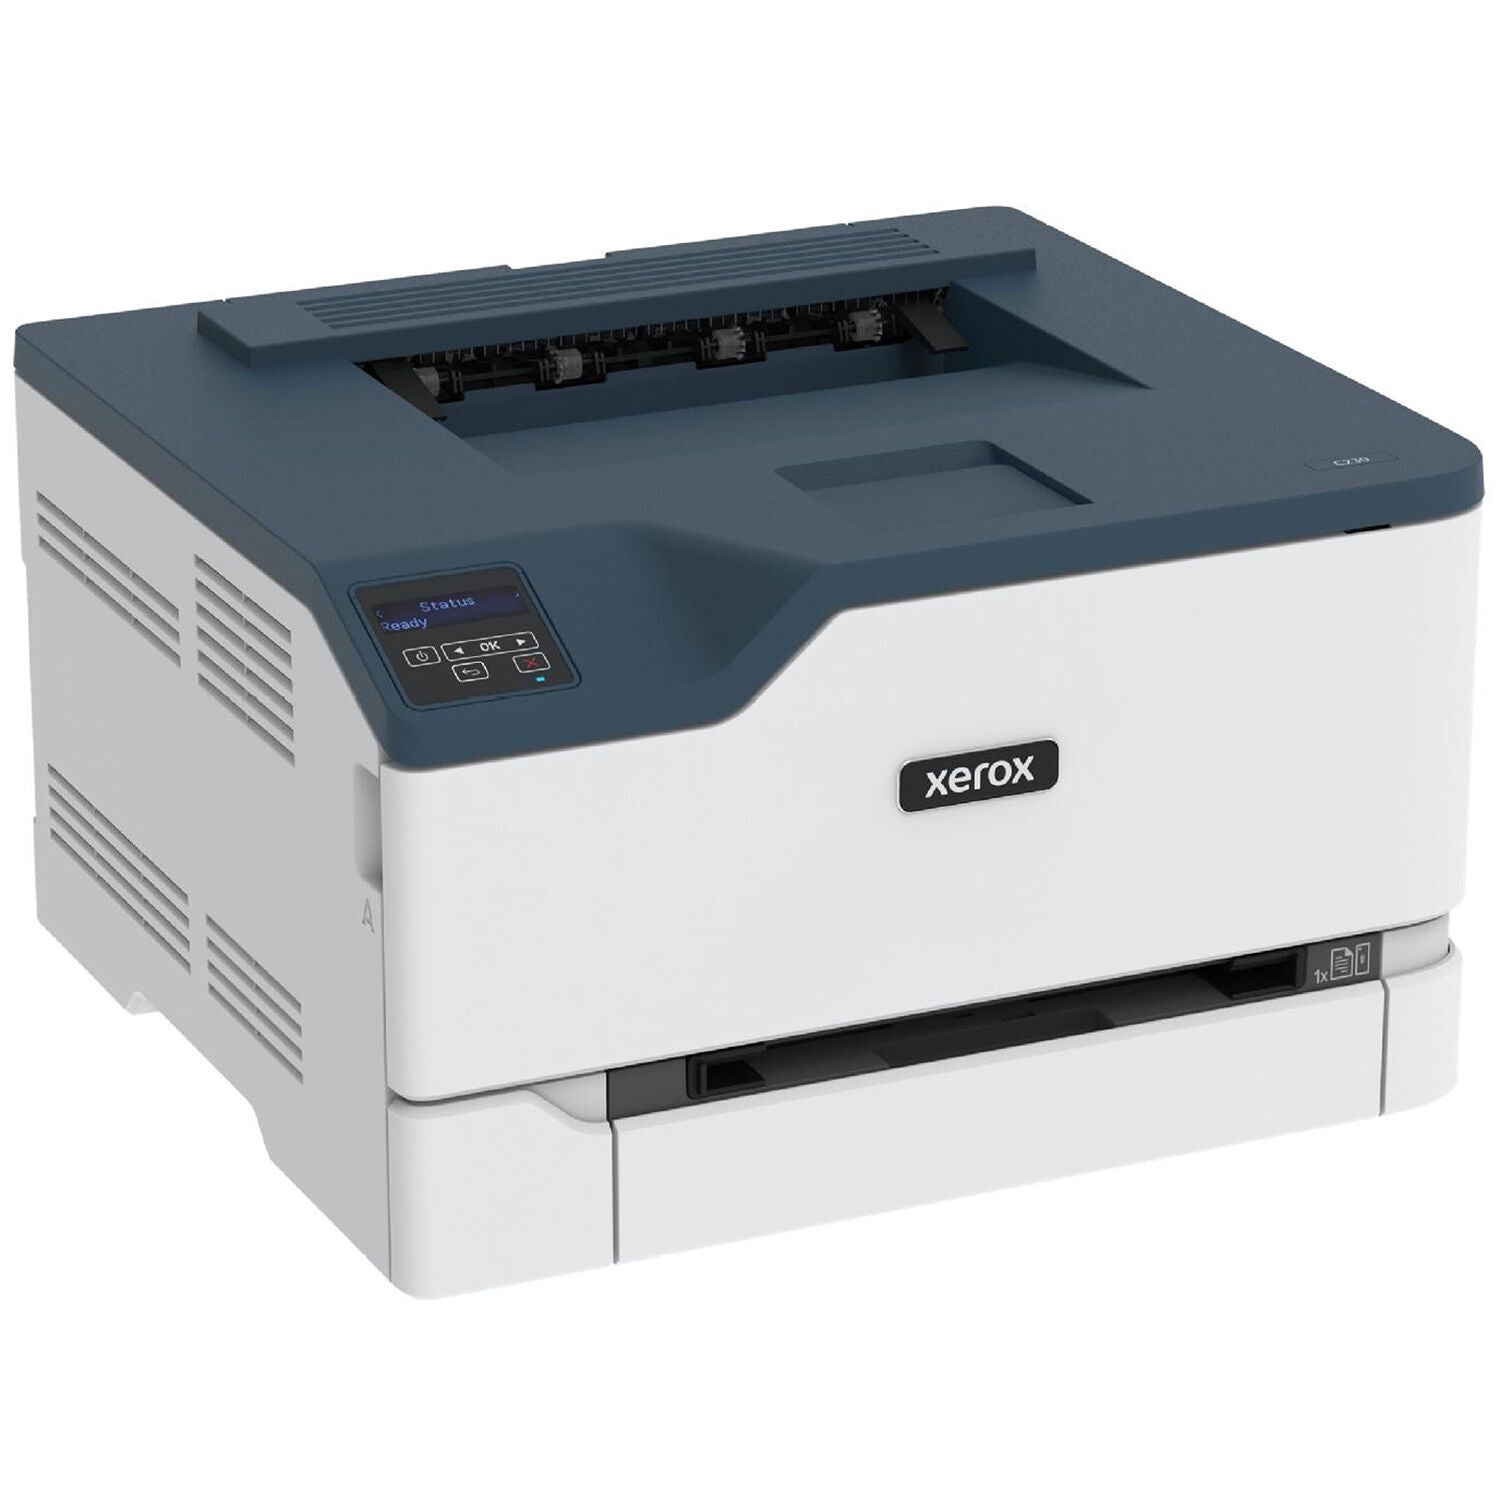 Buy or Lease Xerox C230 Color Laser Printer